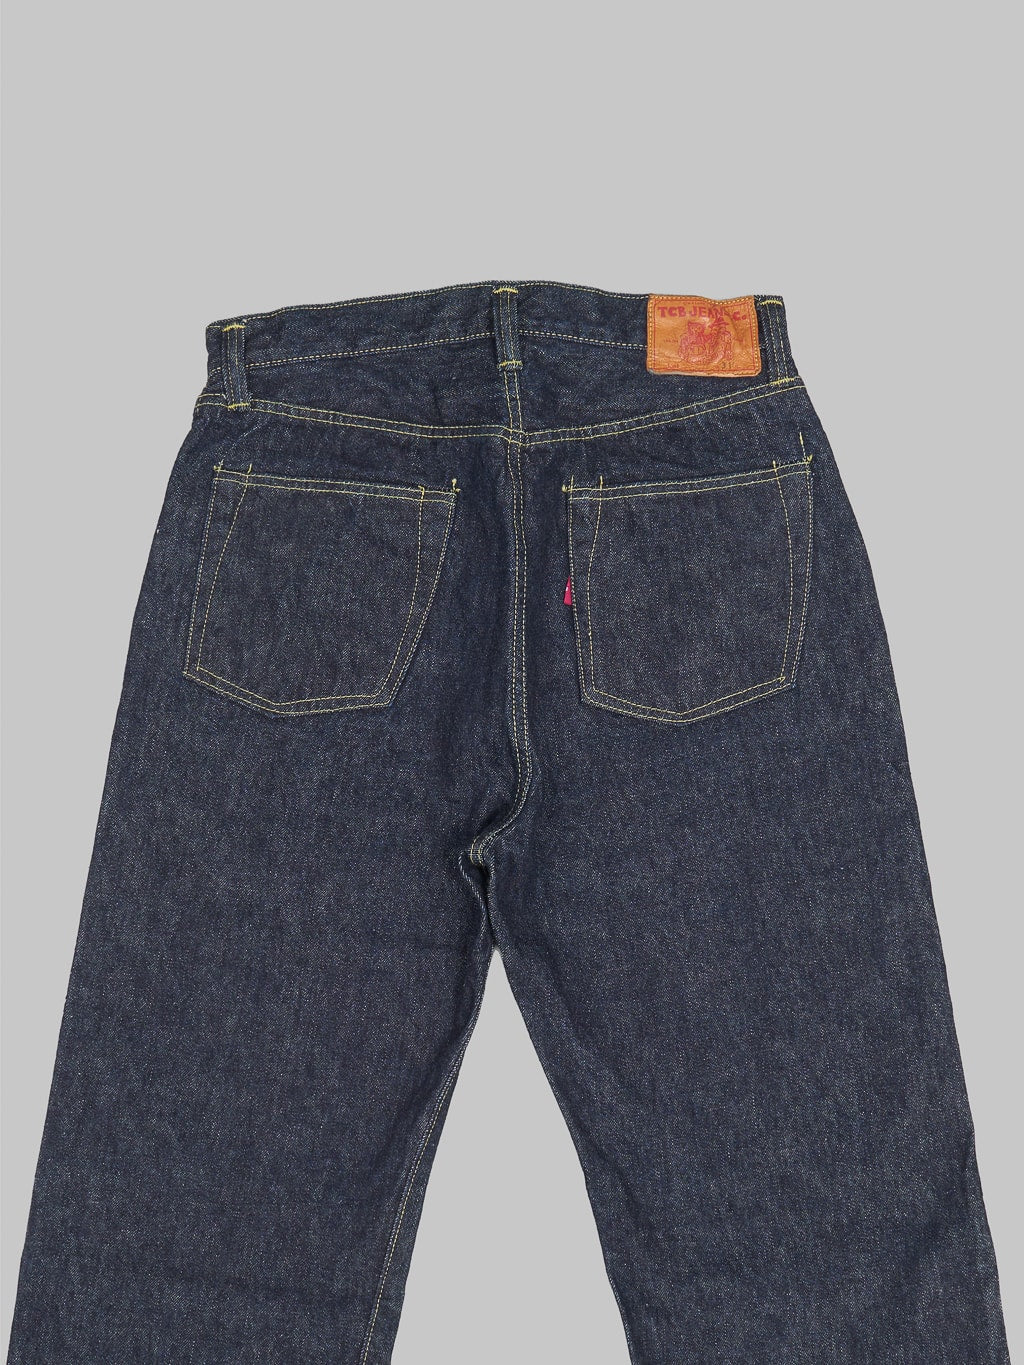 tcb s40s regular straight jeans back details